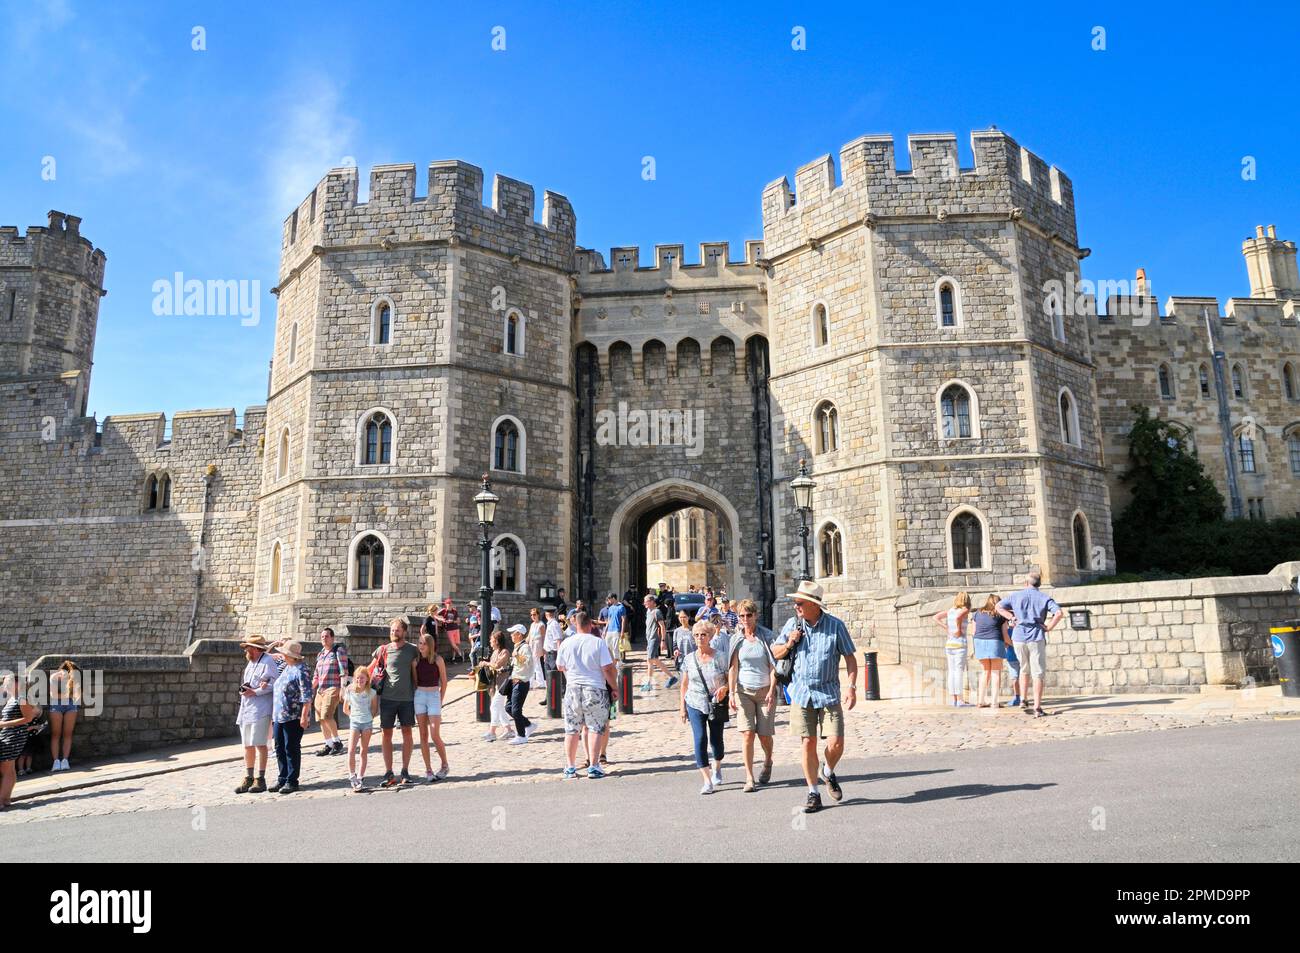 Tourists in summer outside King Henry VIII Gate at Windsor Castle, largest inhabited castle in the world. Castle Hill, Windsor, Berkshire, England, UK Stock Photo